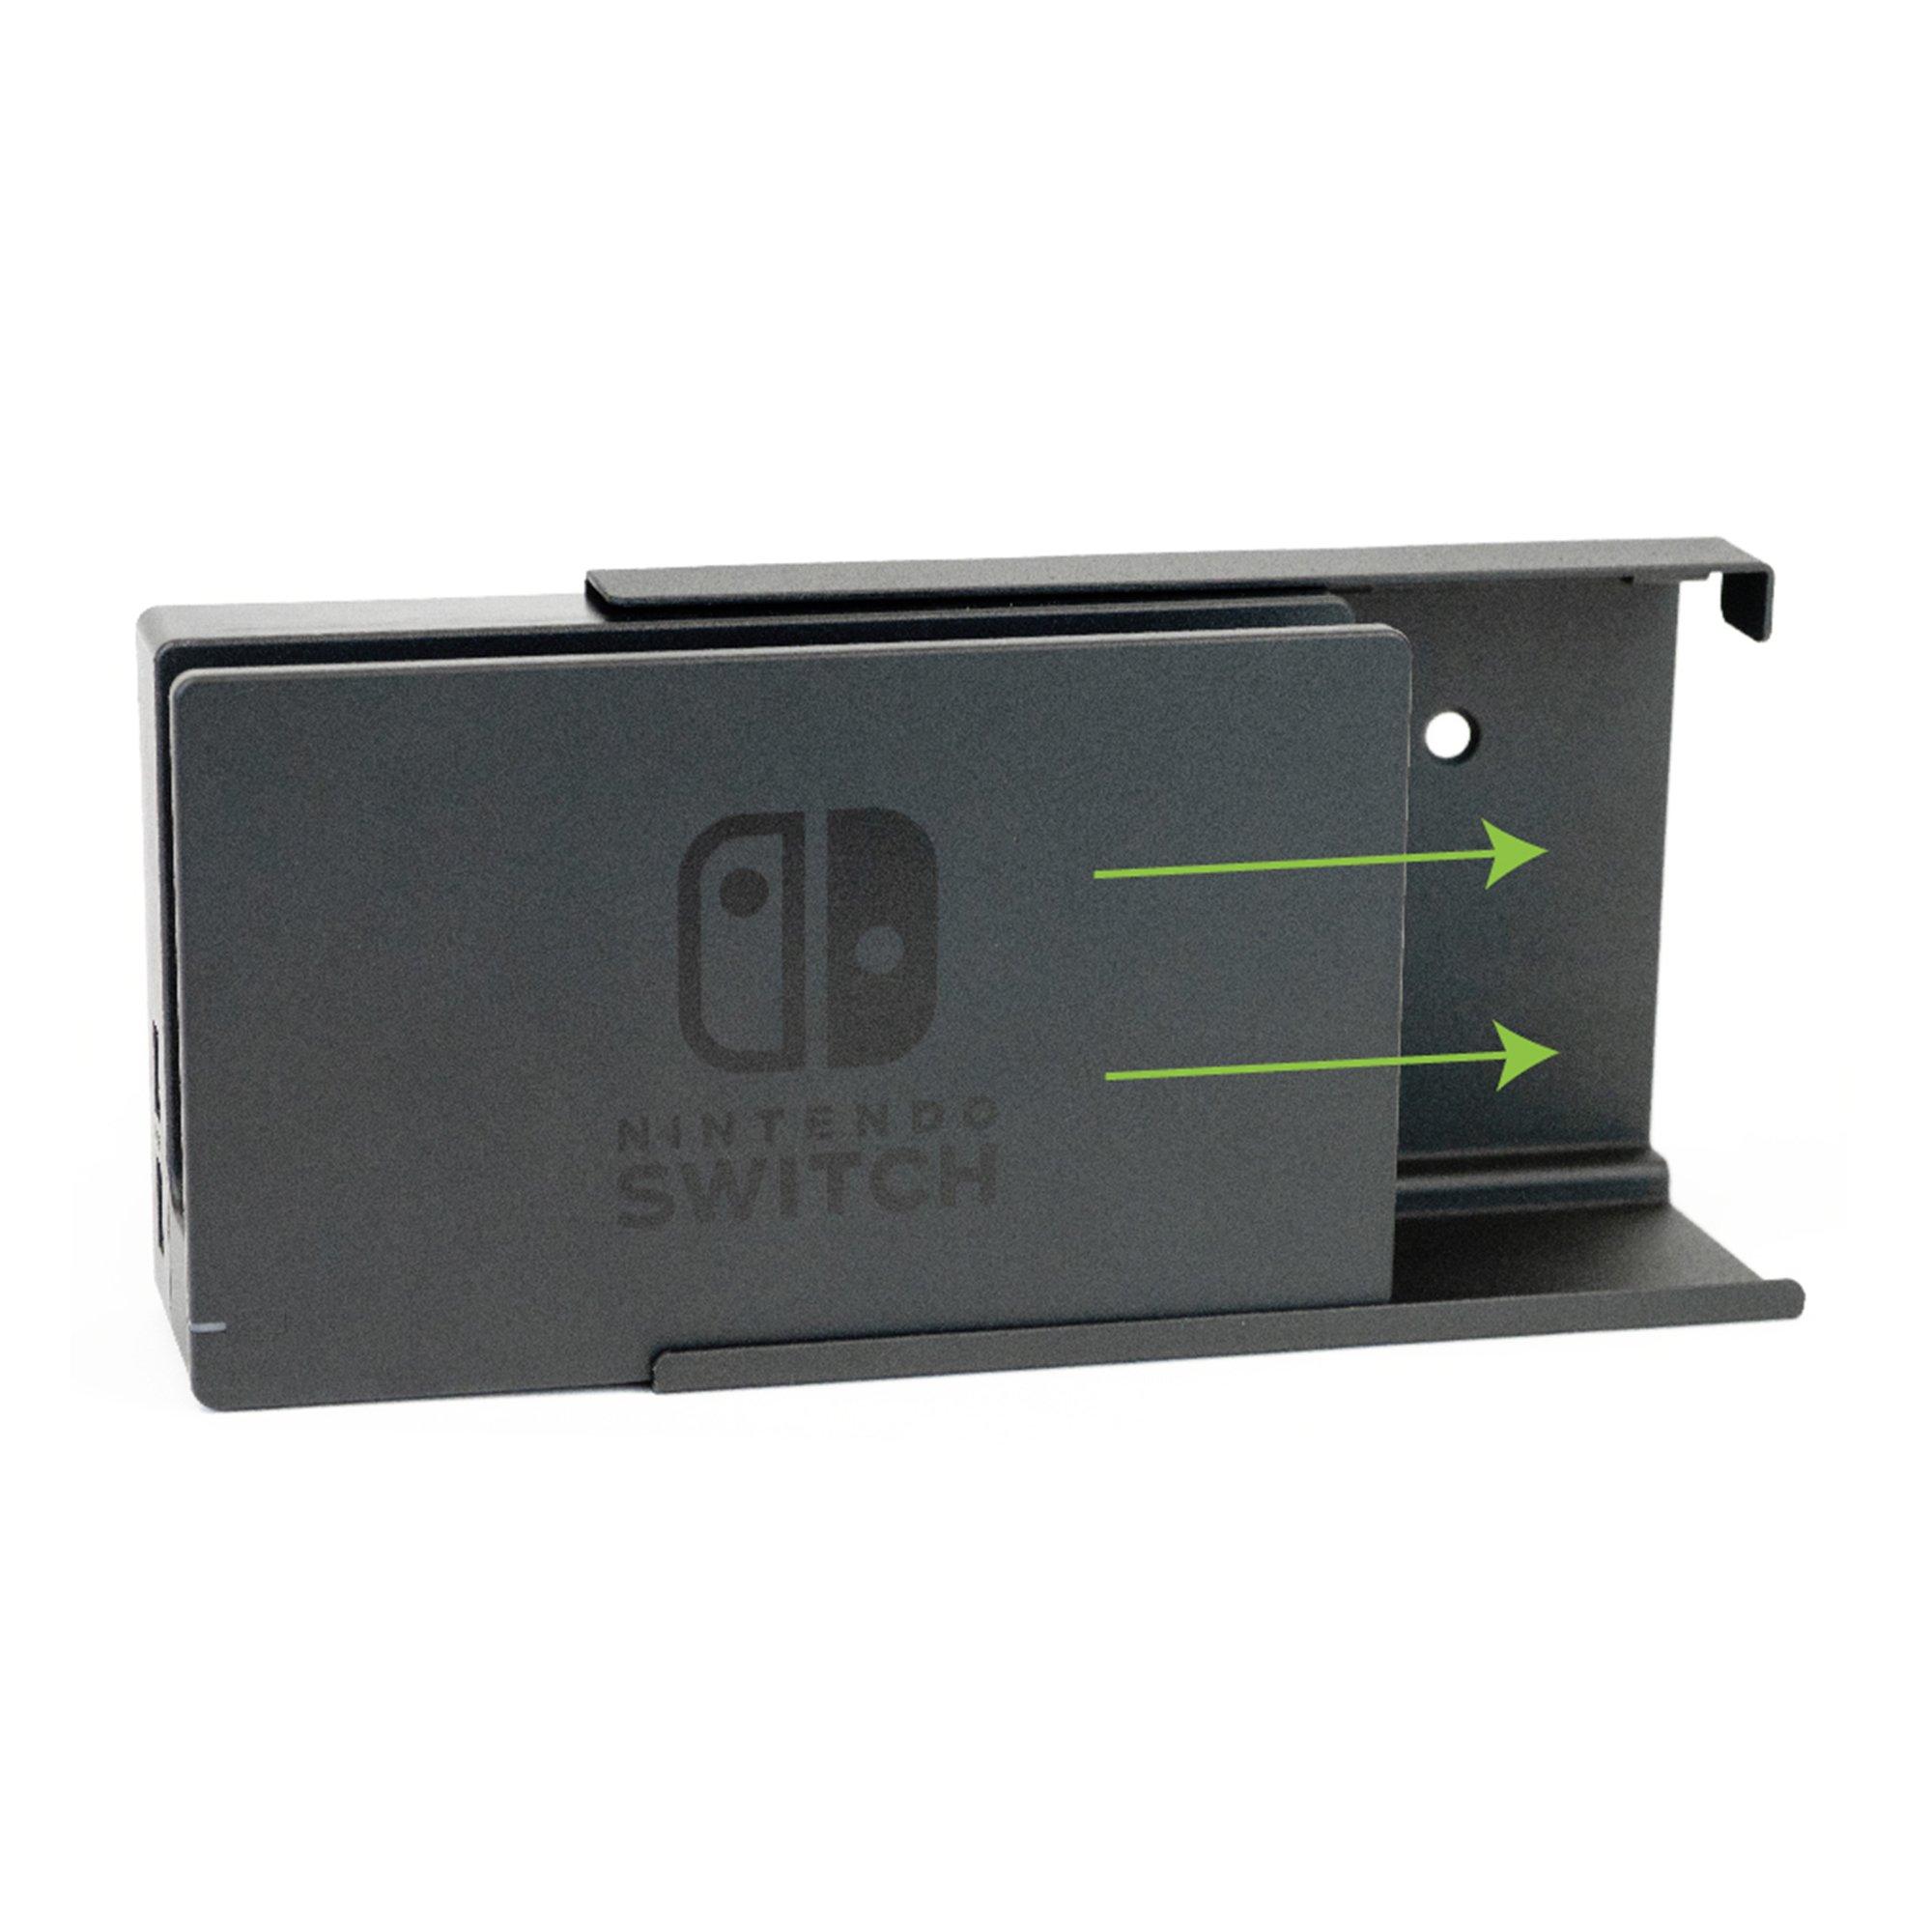 Switch & 2 Controllrs Pro Bndl